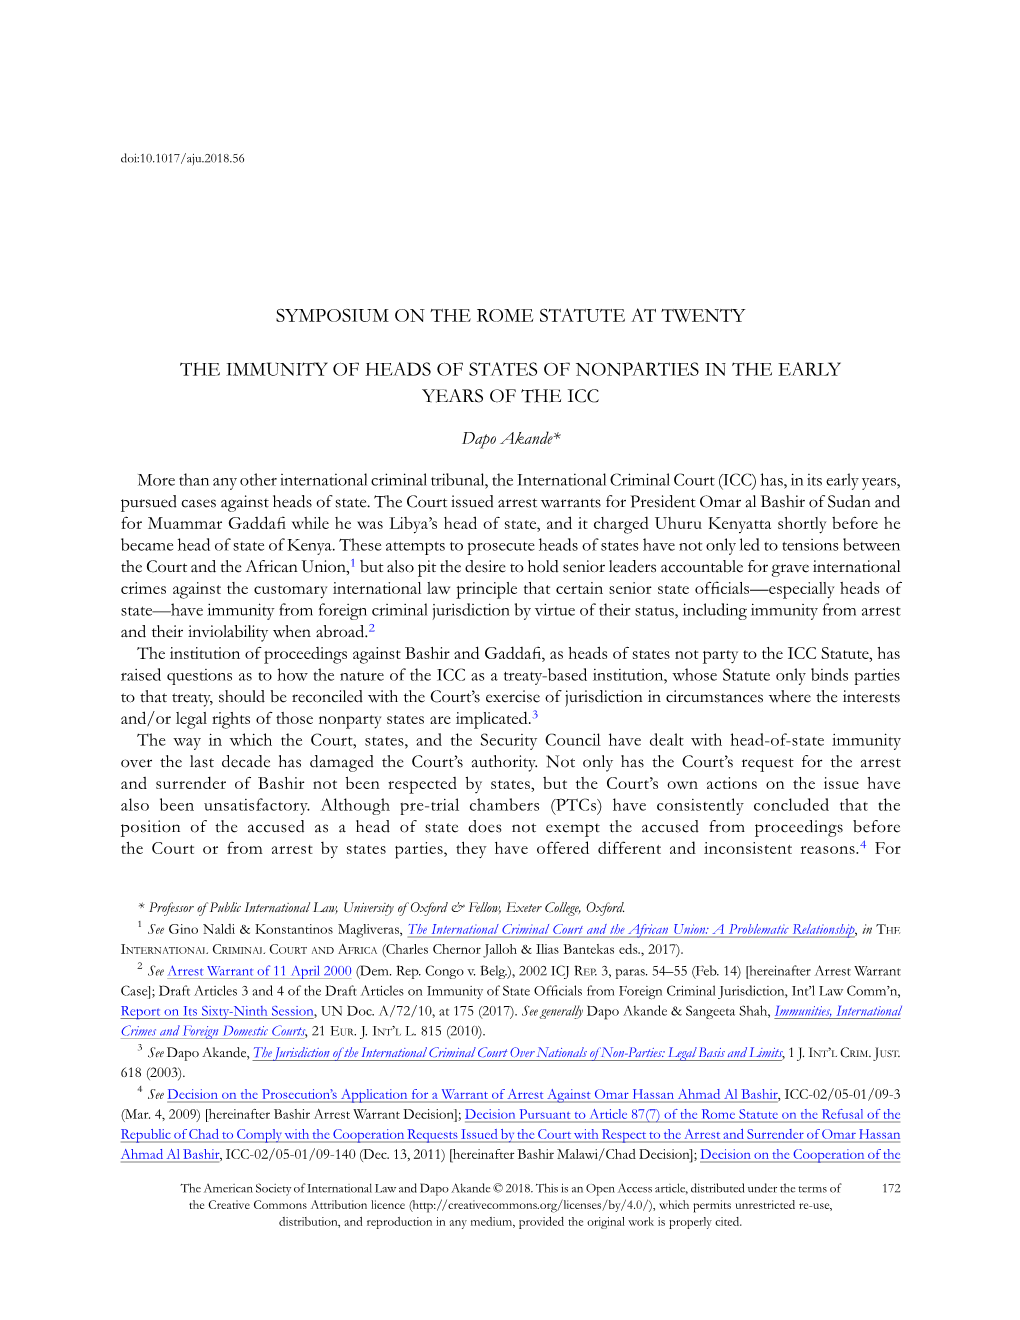 Symposium on the Rome Statute at Twenty The